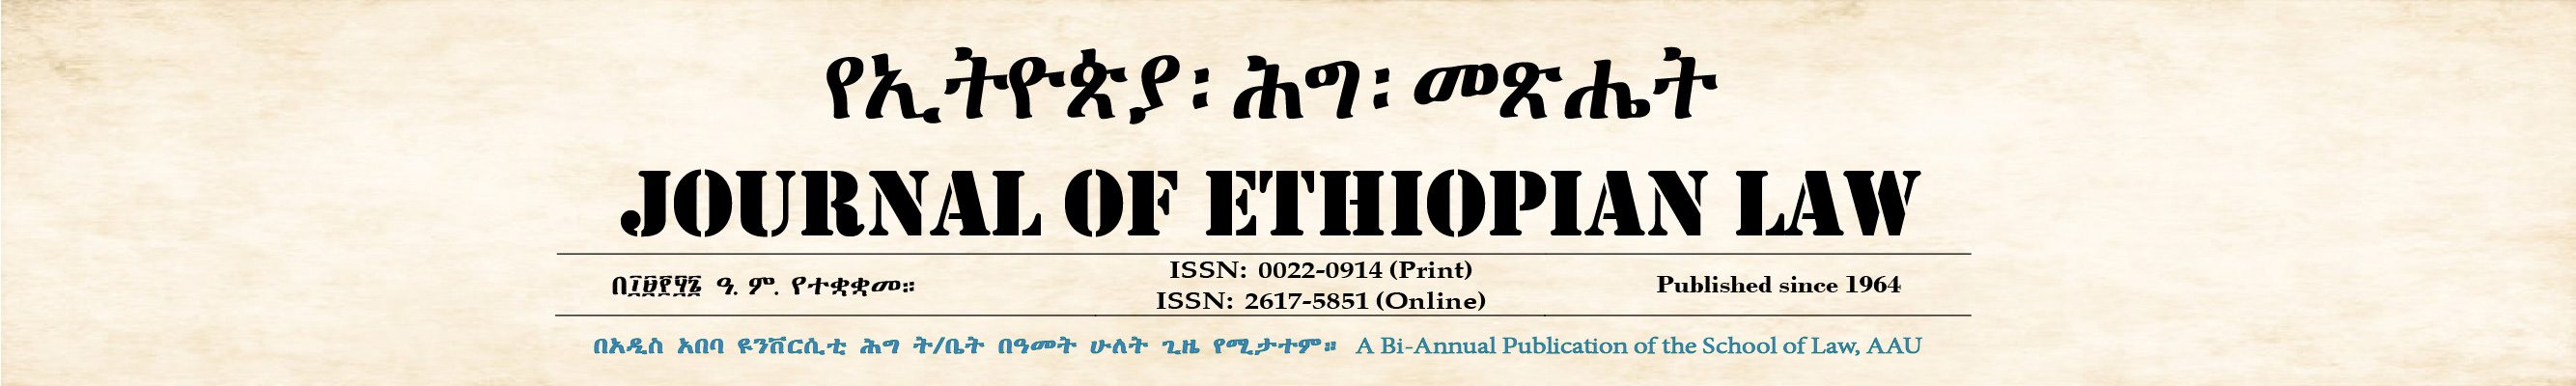 Journal of Ethiopian Law